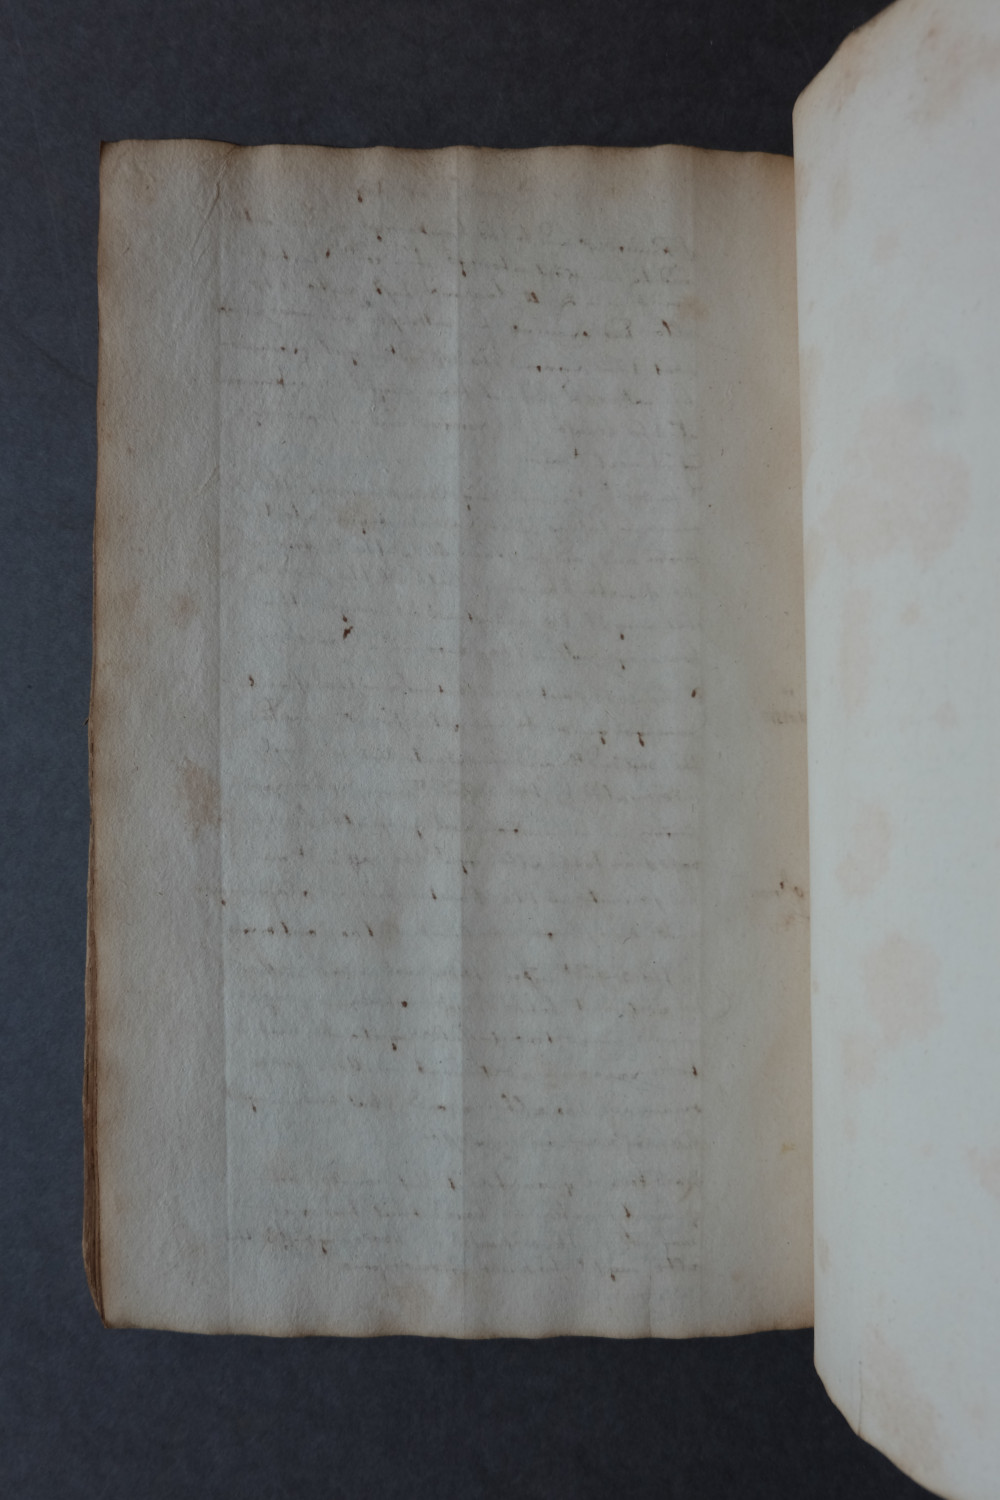 Folio 76 verso